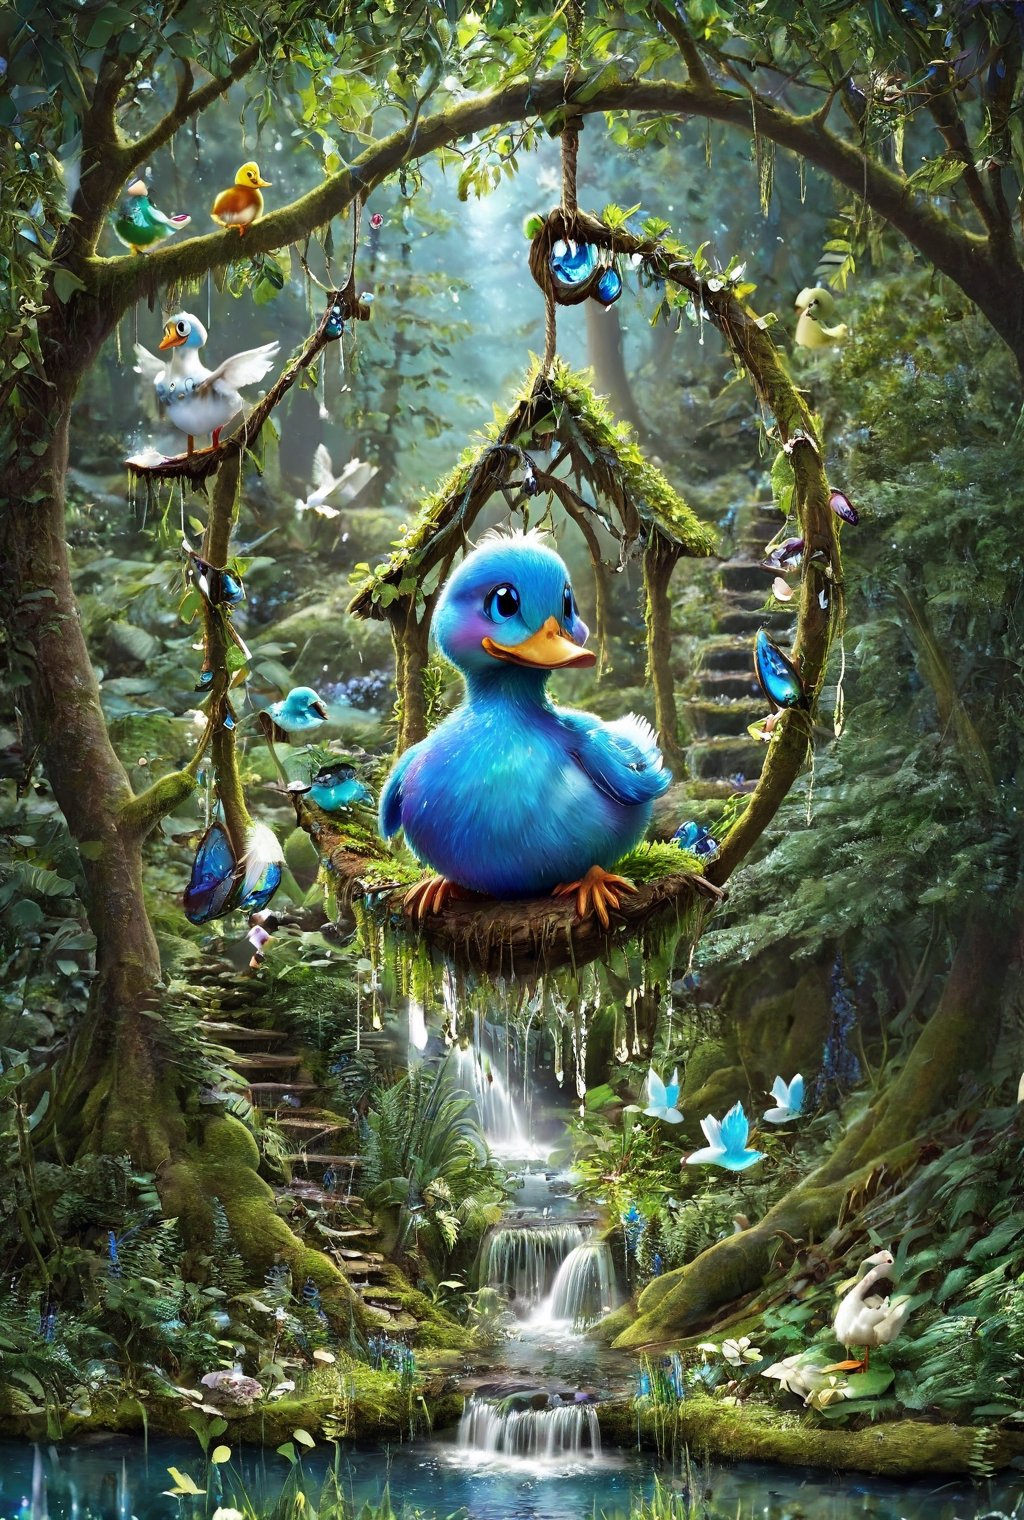  fantacy ,beautiful fairlyl, blue icey eyes,( plyaing wa_gon), in fantacy magic forest, on leaf swing, fairytale, fantacy waterfall, lake, duck ,mashroom , mini house, colour art,style,DissolveSdxl0,3l3ctronics